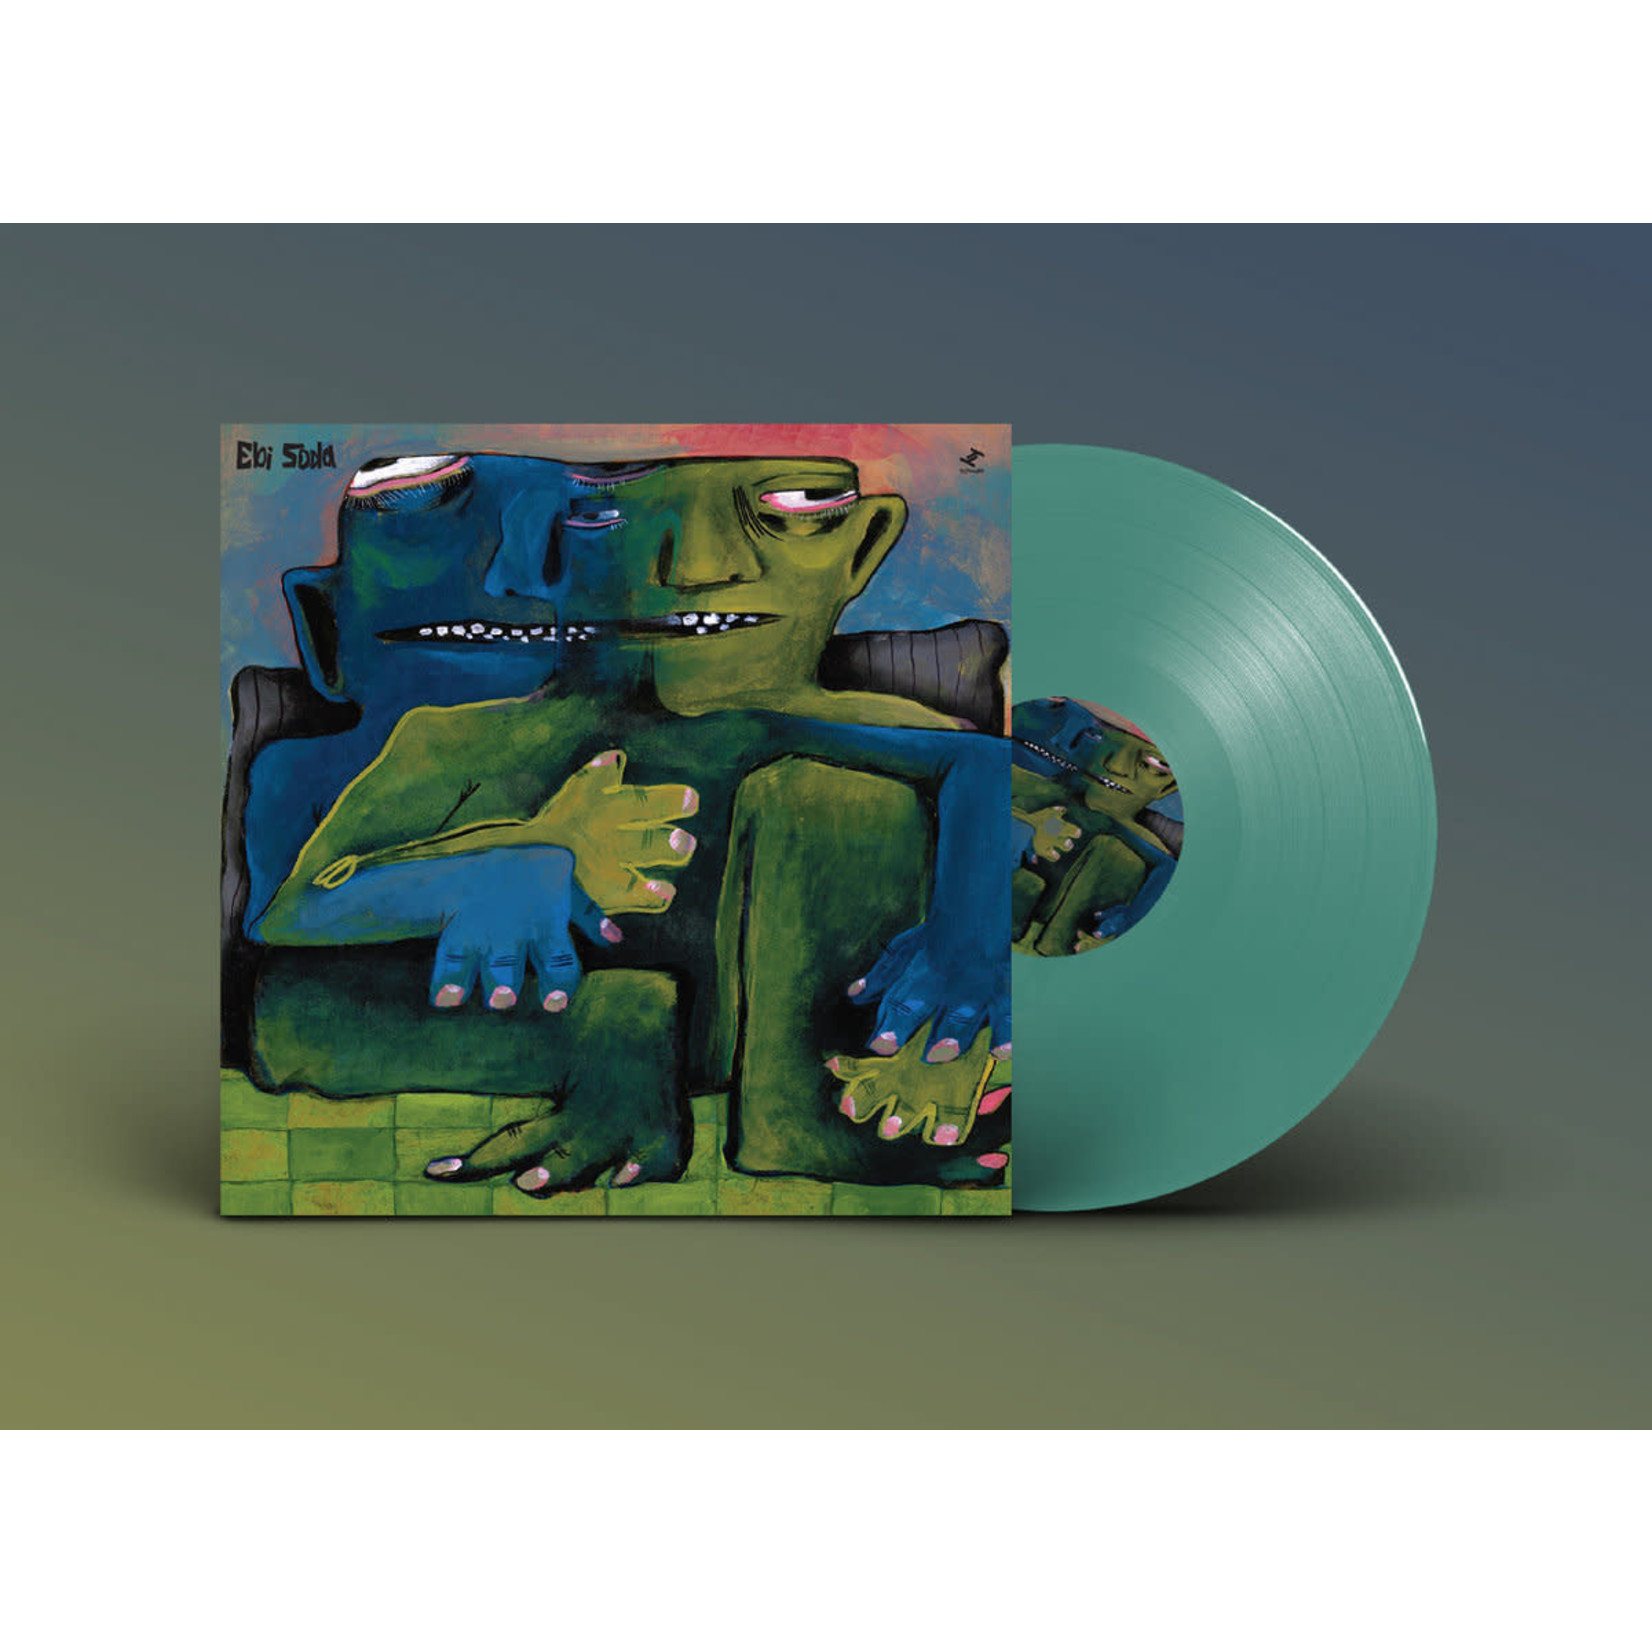 [New] Ebi Soda - Ebi Soda (12"EP, green vinyl)